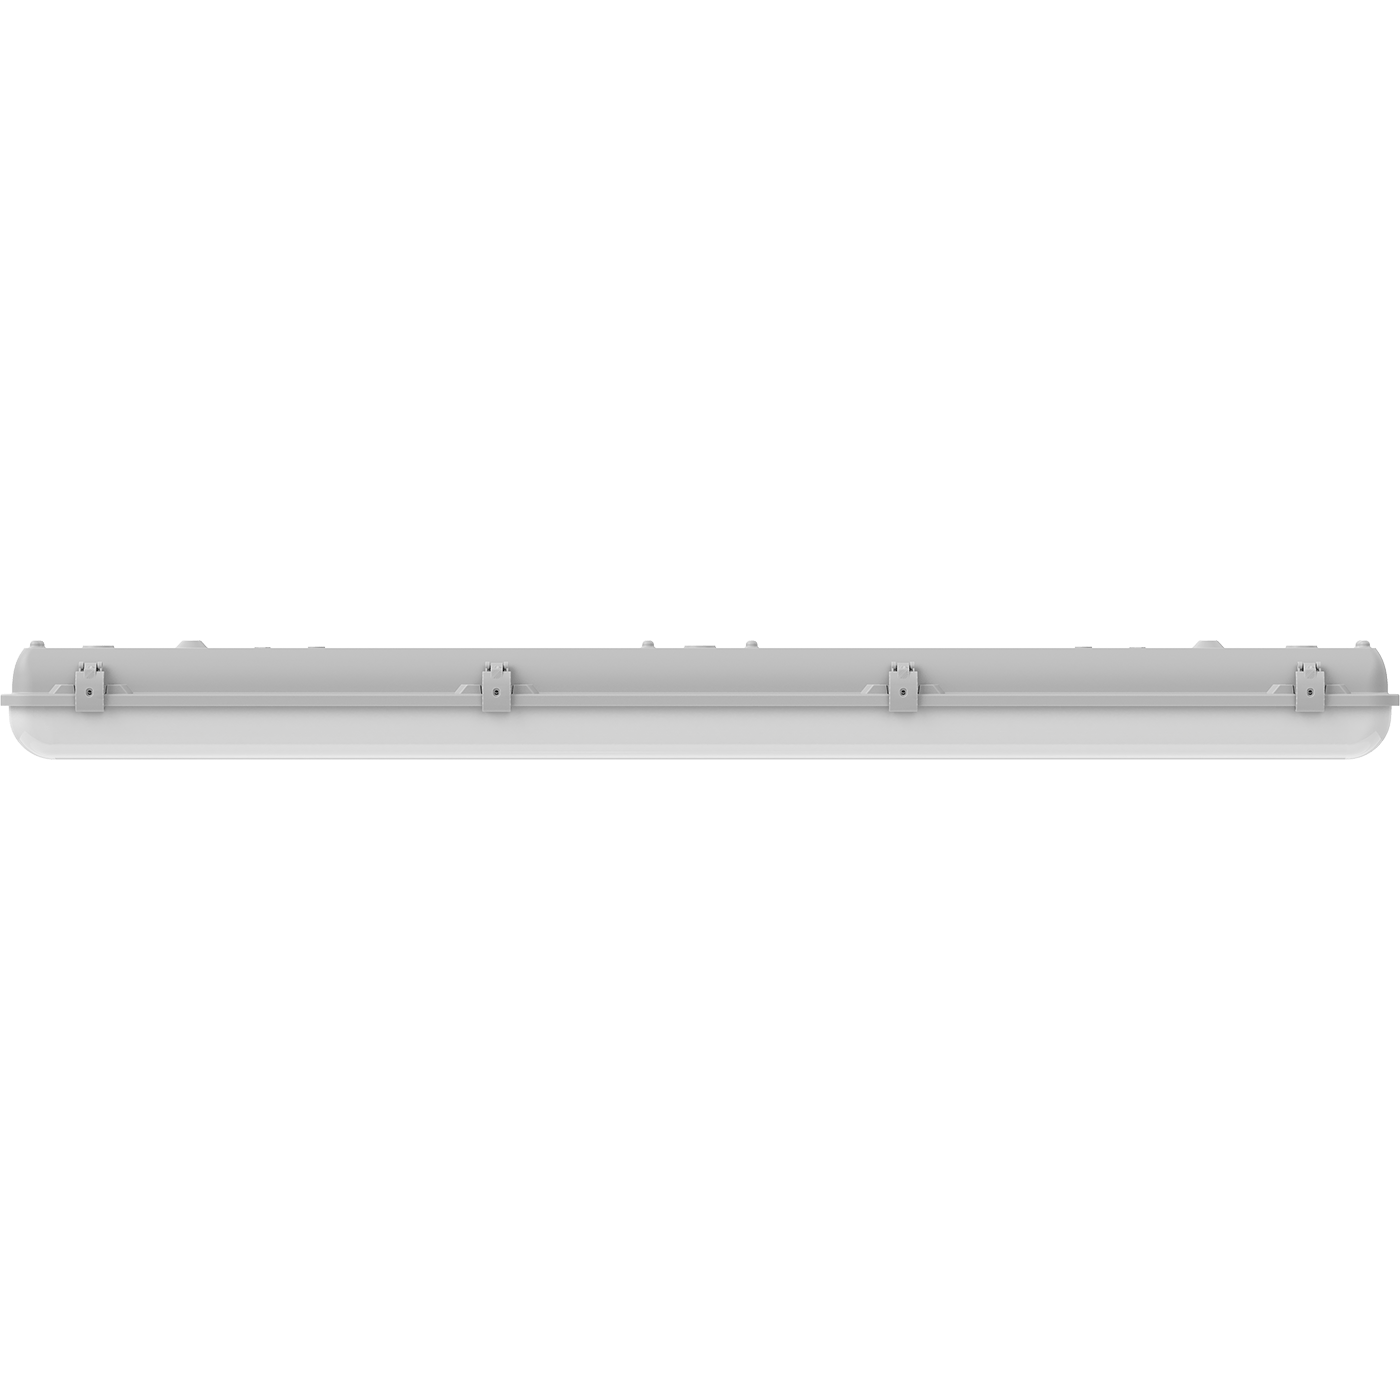 ламповые ARCTIC 128 (SAN/SMC) HF, артикул 1069002050